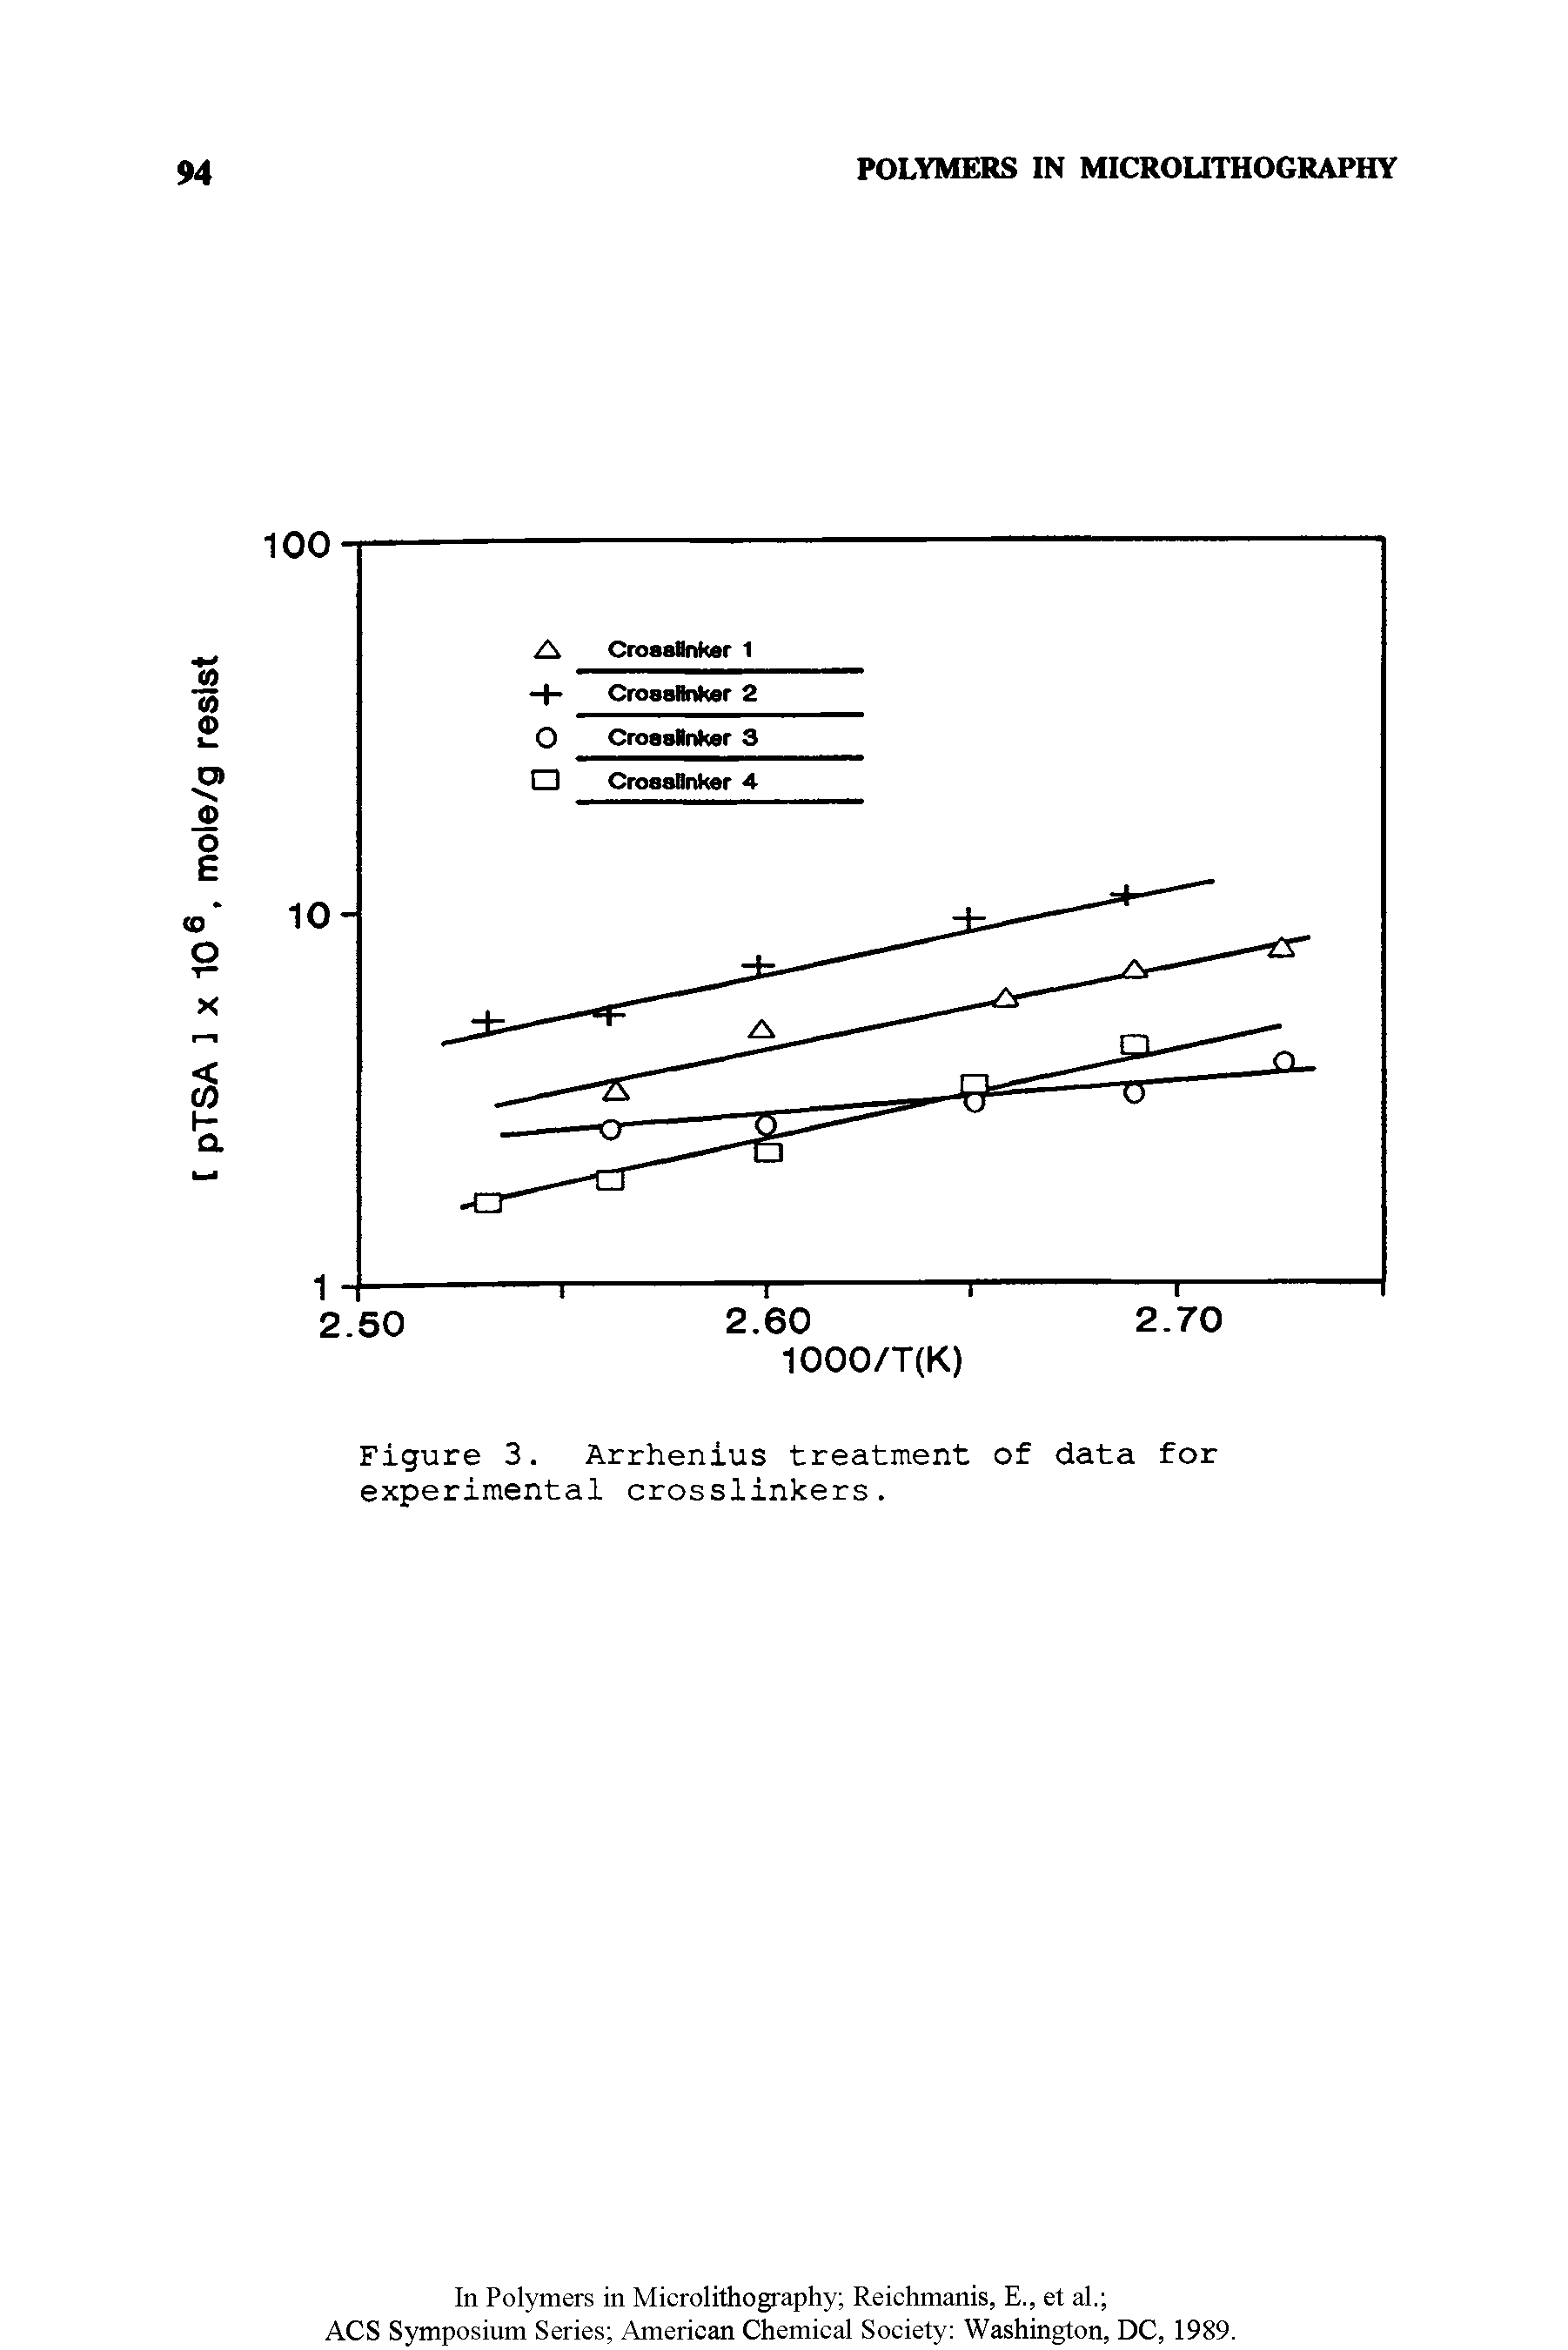 Figure 3. Arrhenius treatment of data for experimental crosslinkers.